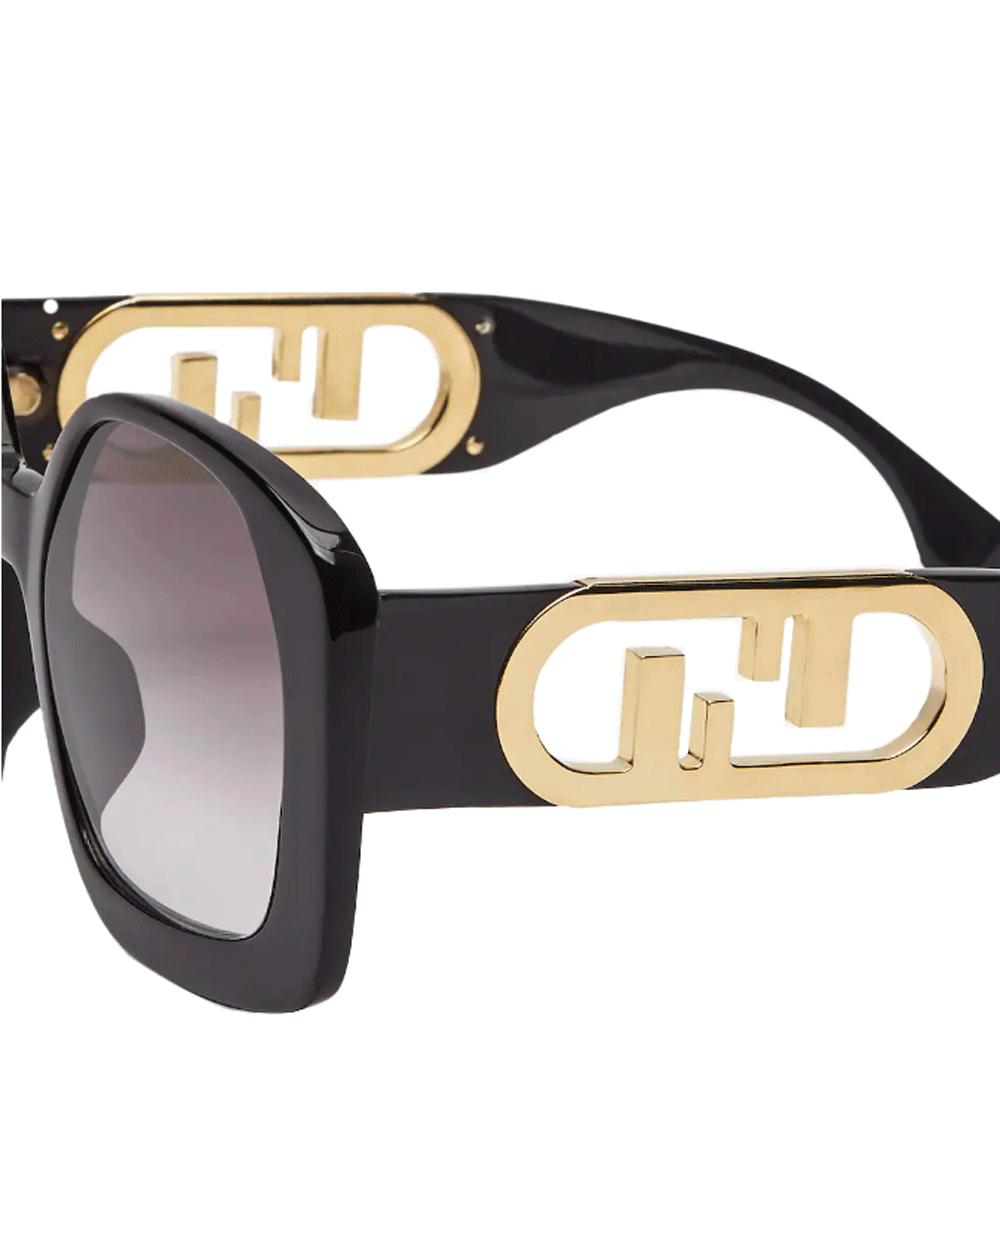 O'Lock - Black acetate sunglasses